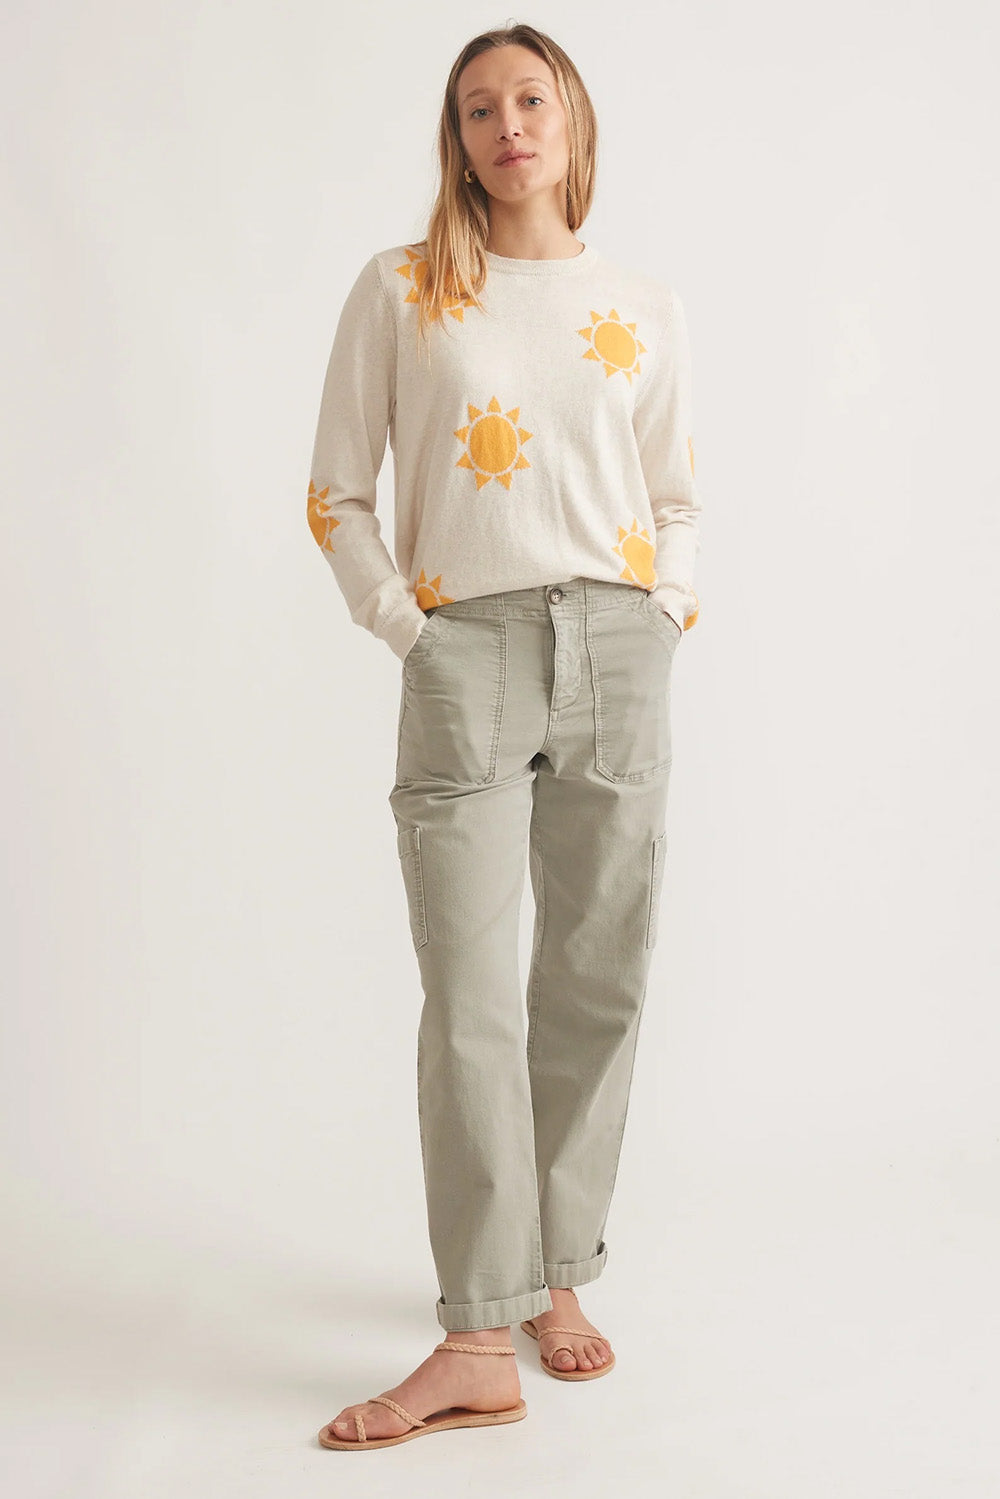 Marine Layer - Icon Sweater - Sun Print